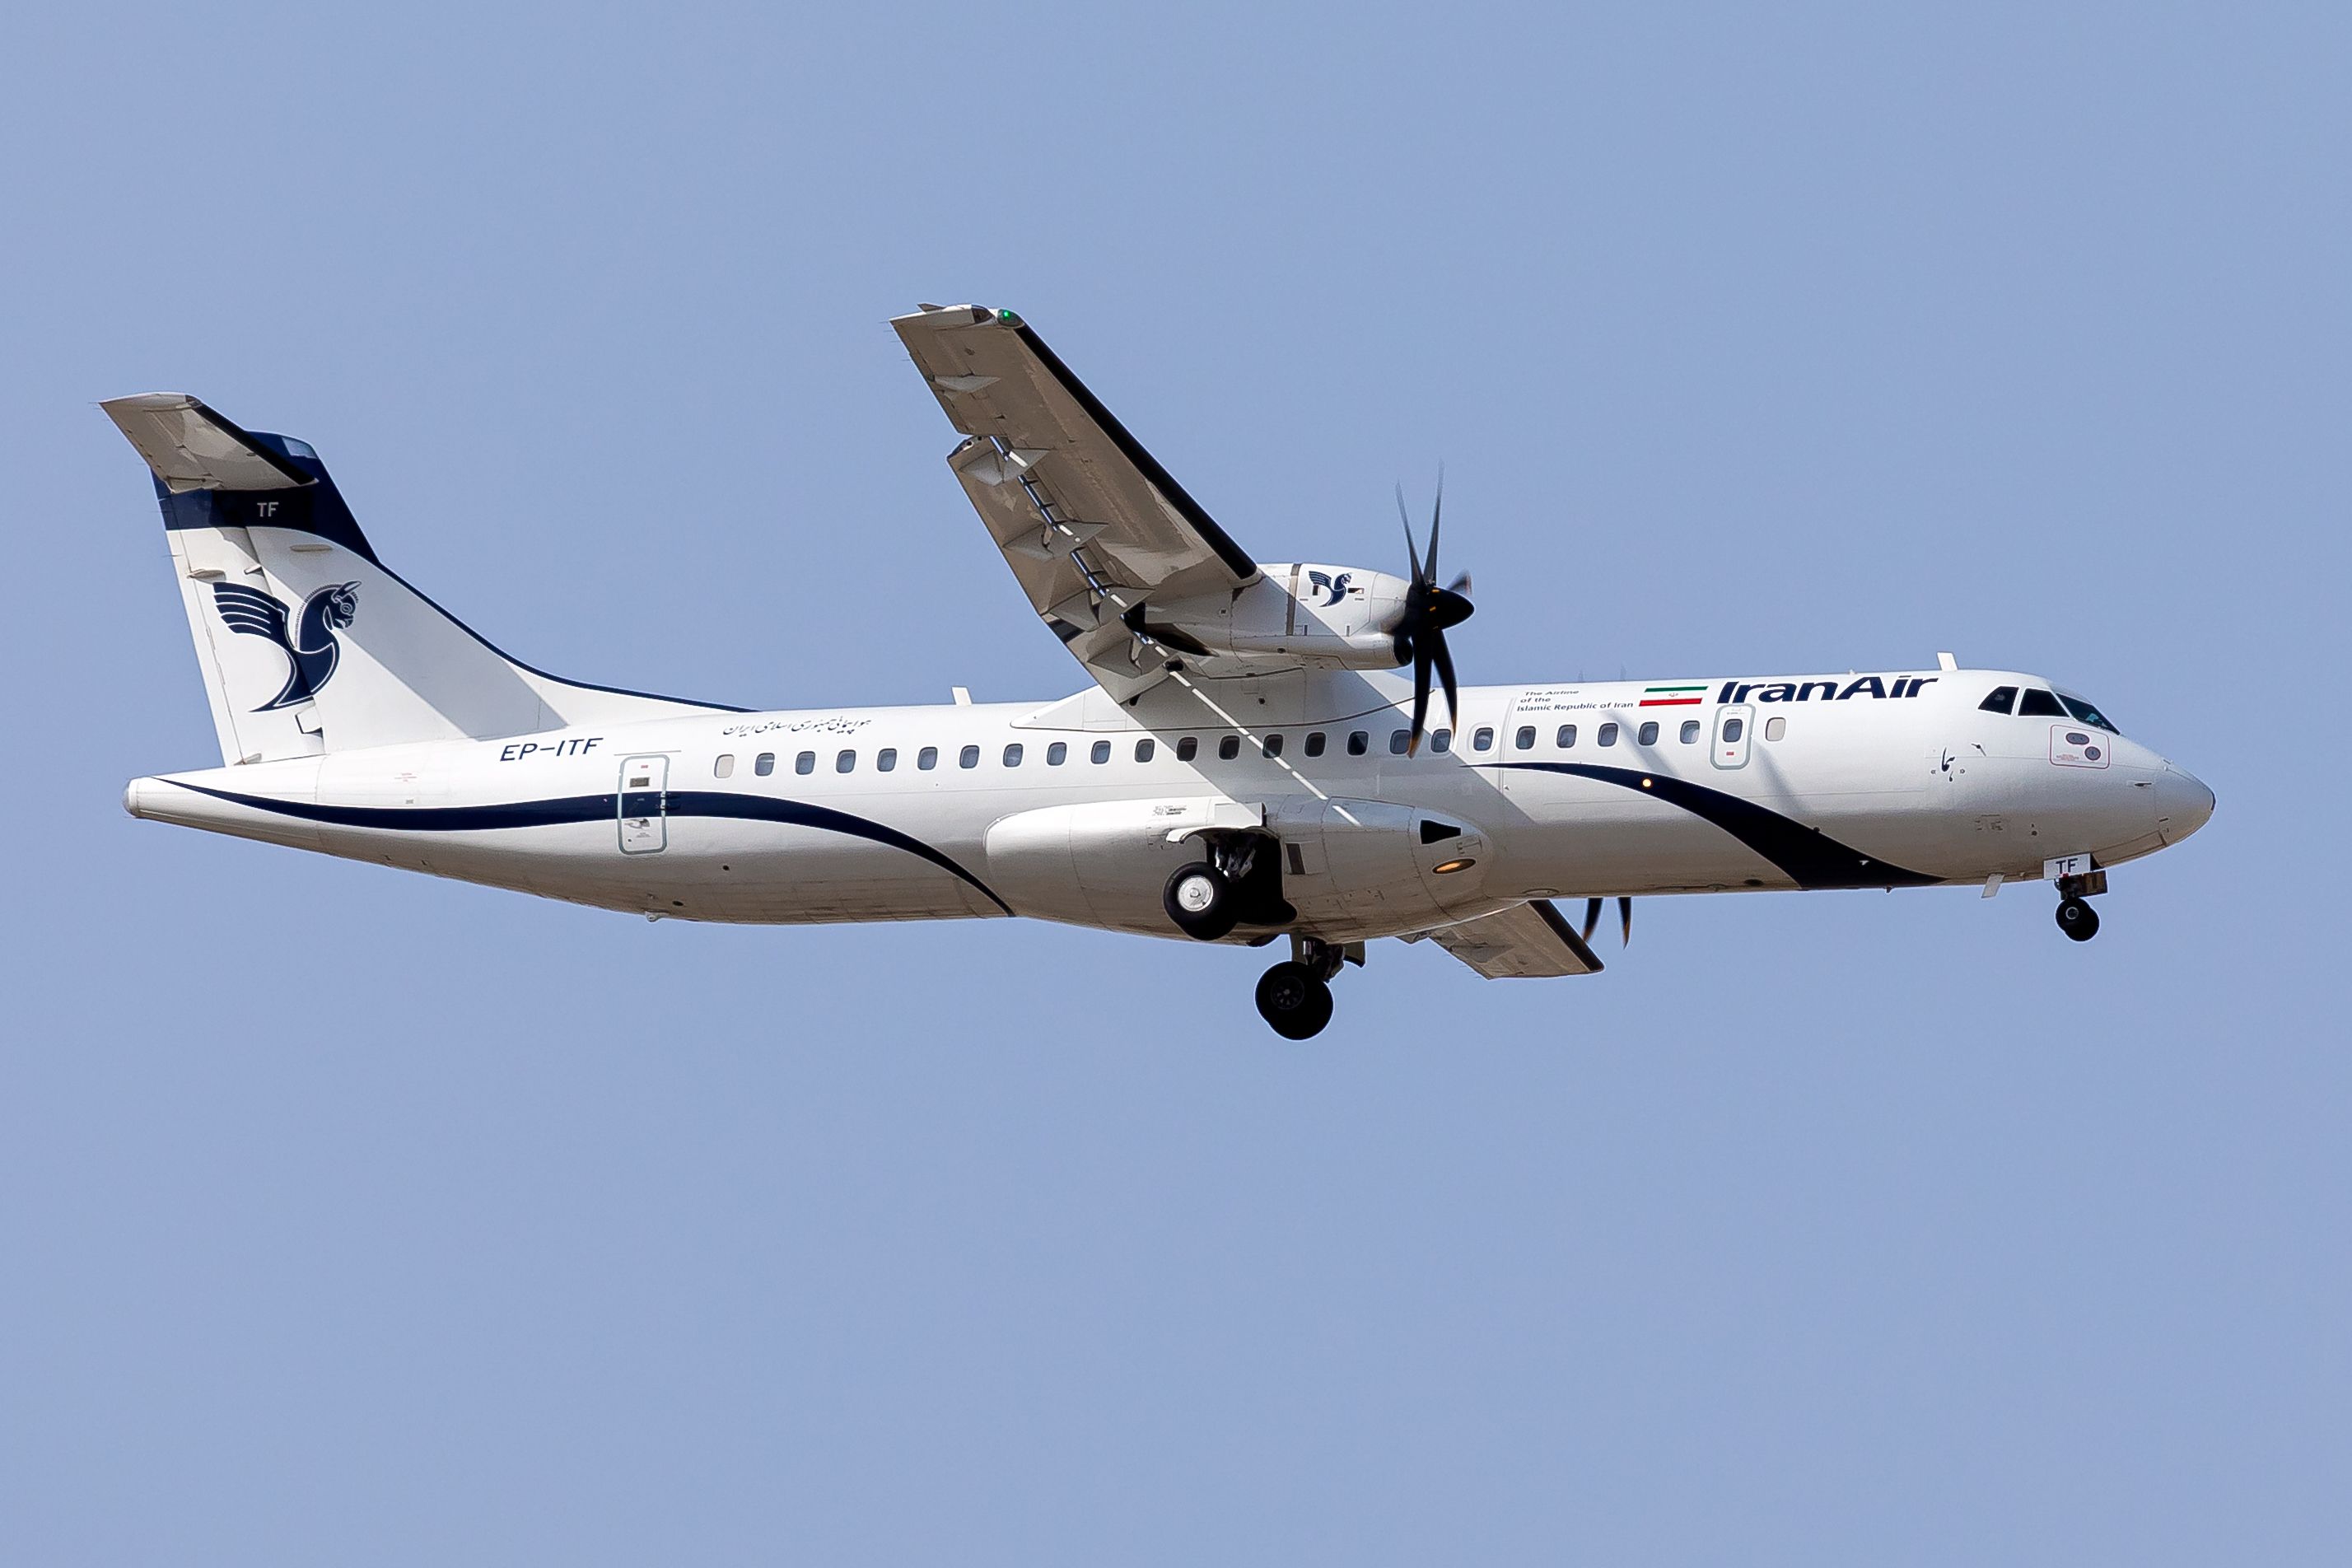 Iran Air ATR 72